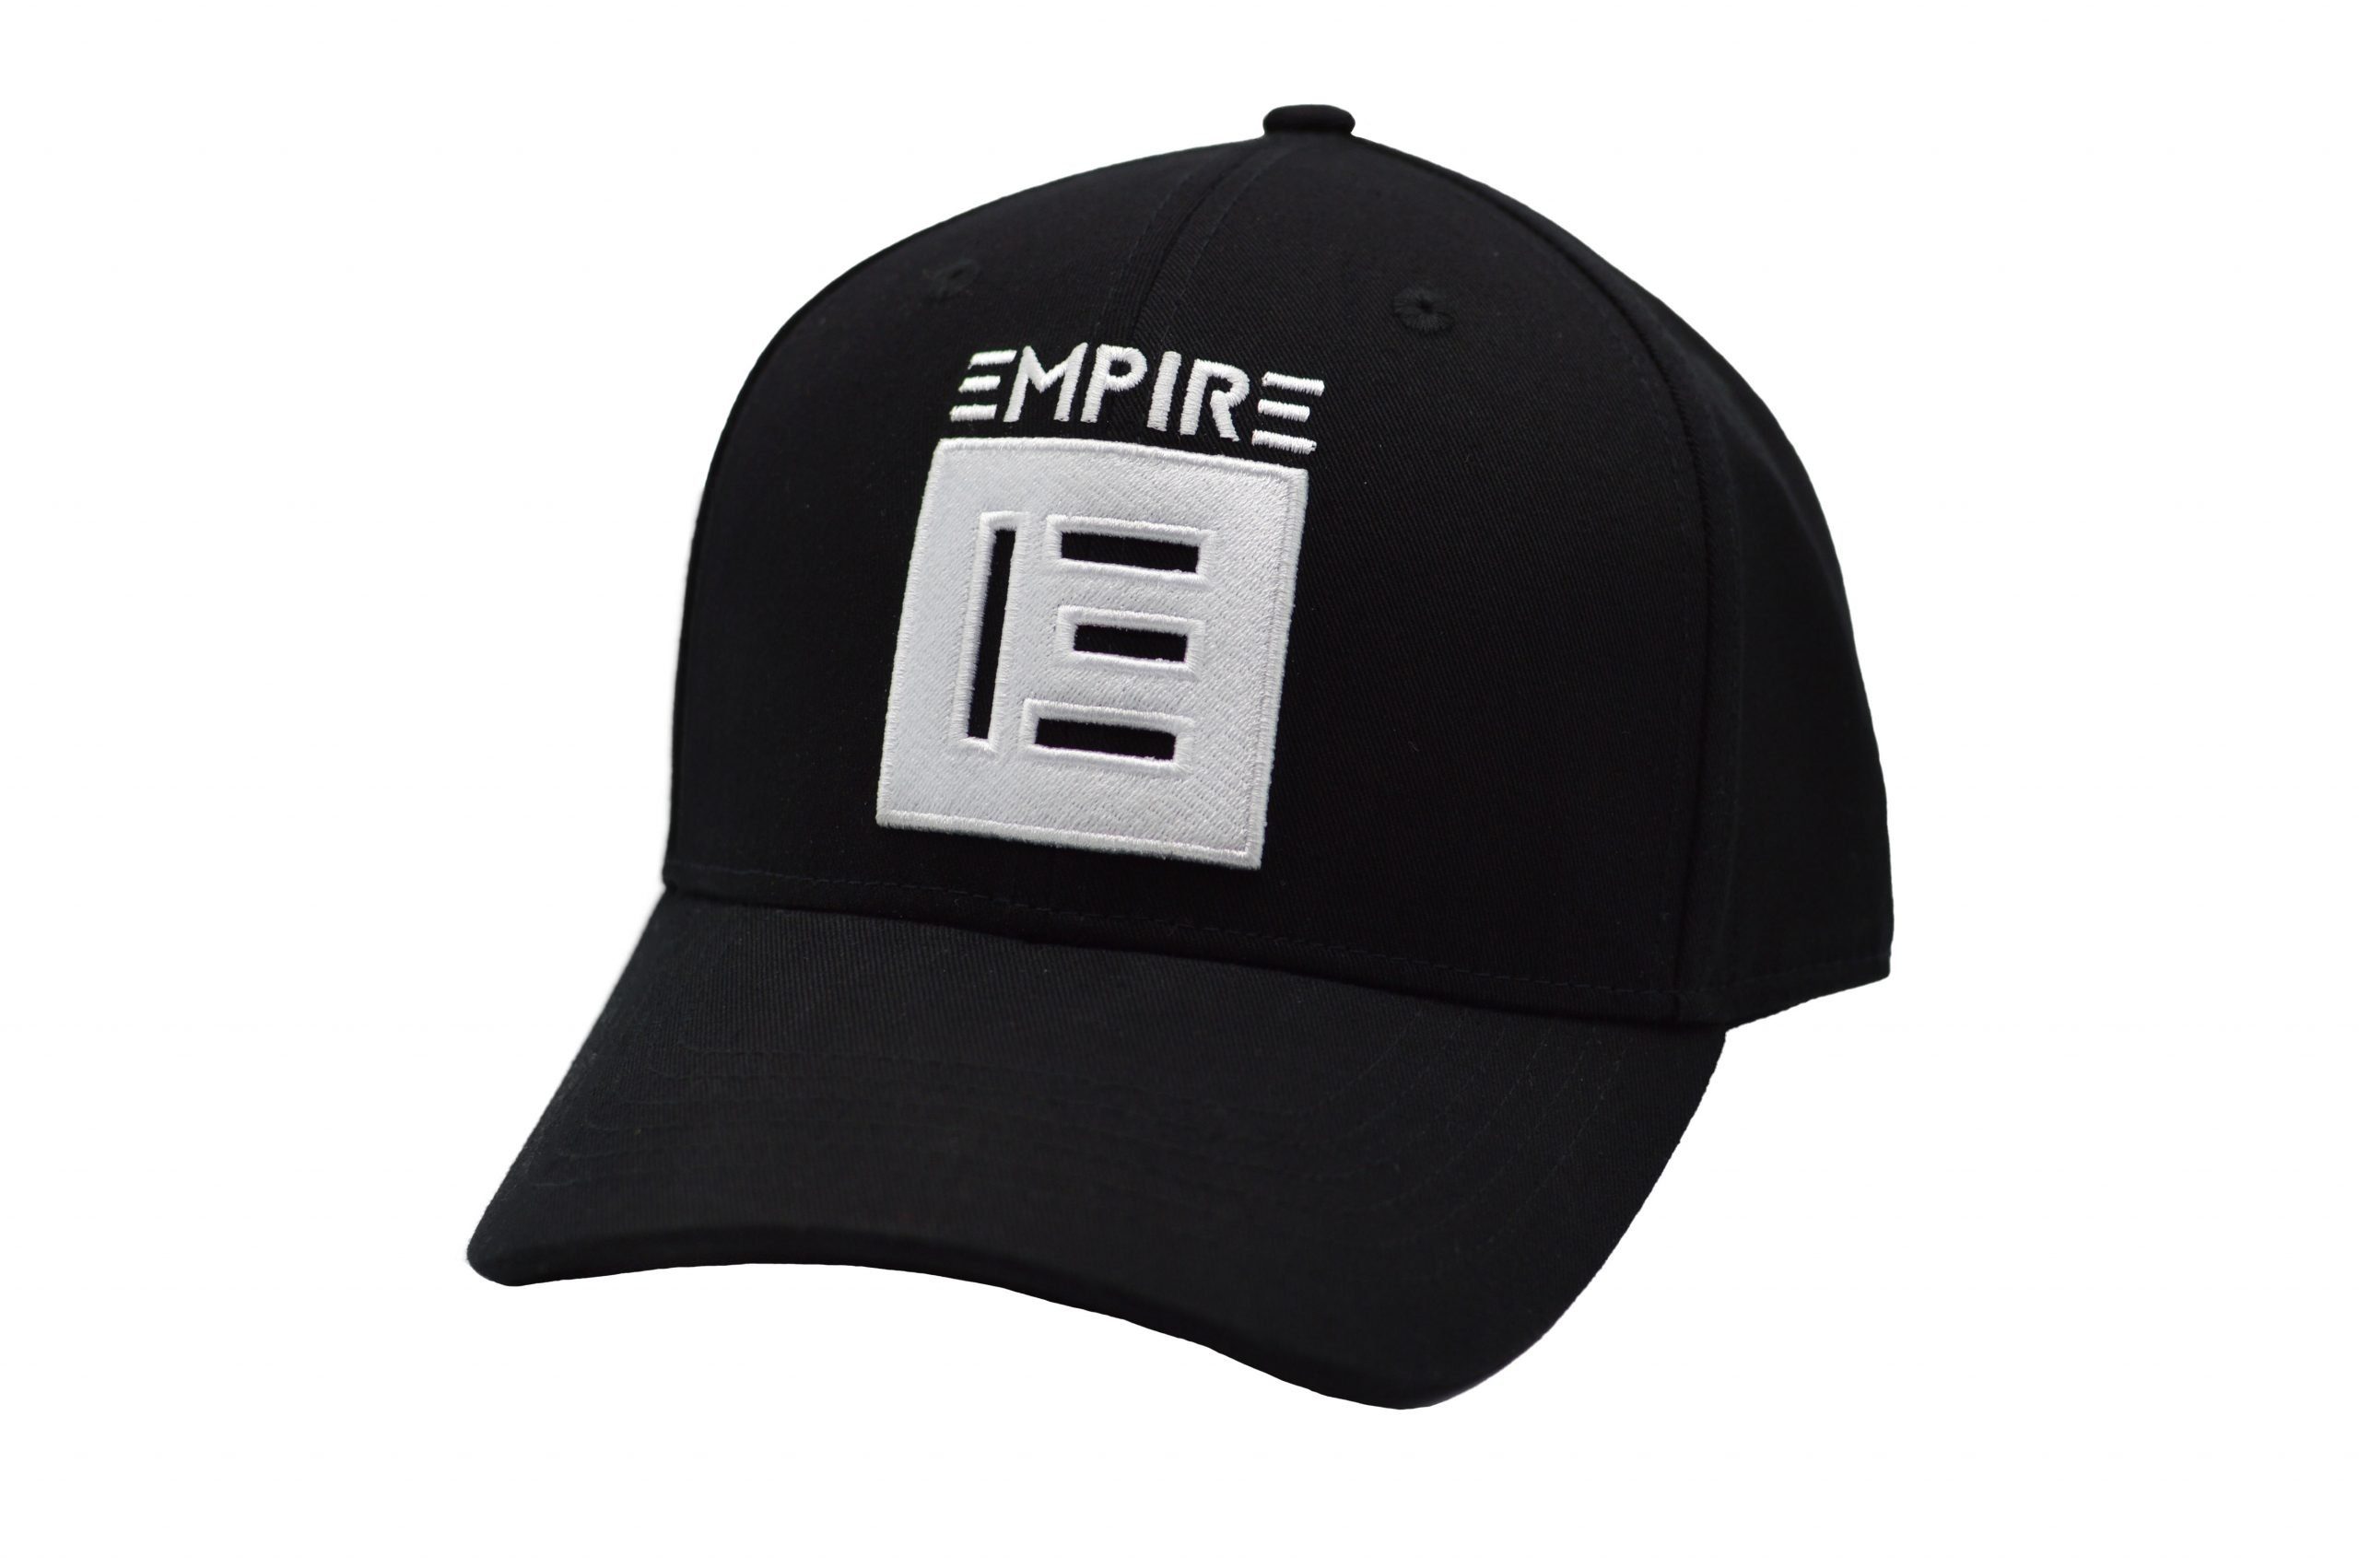 EMPIRE-THIRTEEN Baseball Cap "EMPIRE" CAP and black white